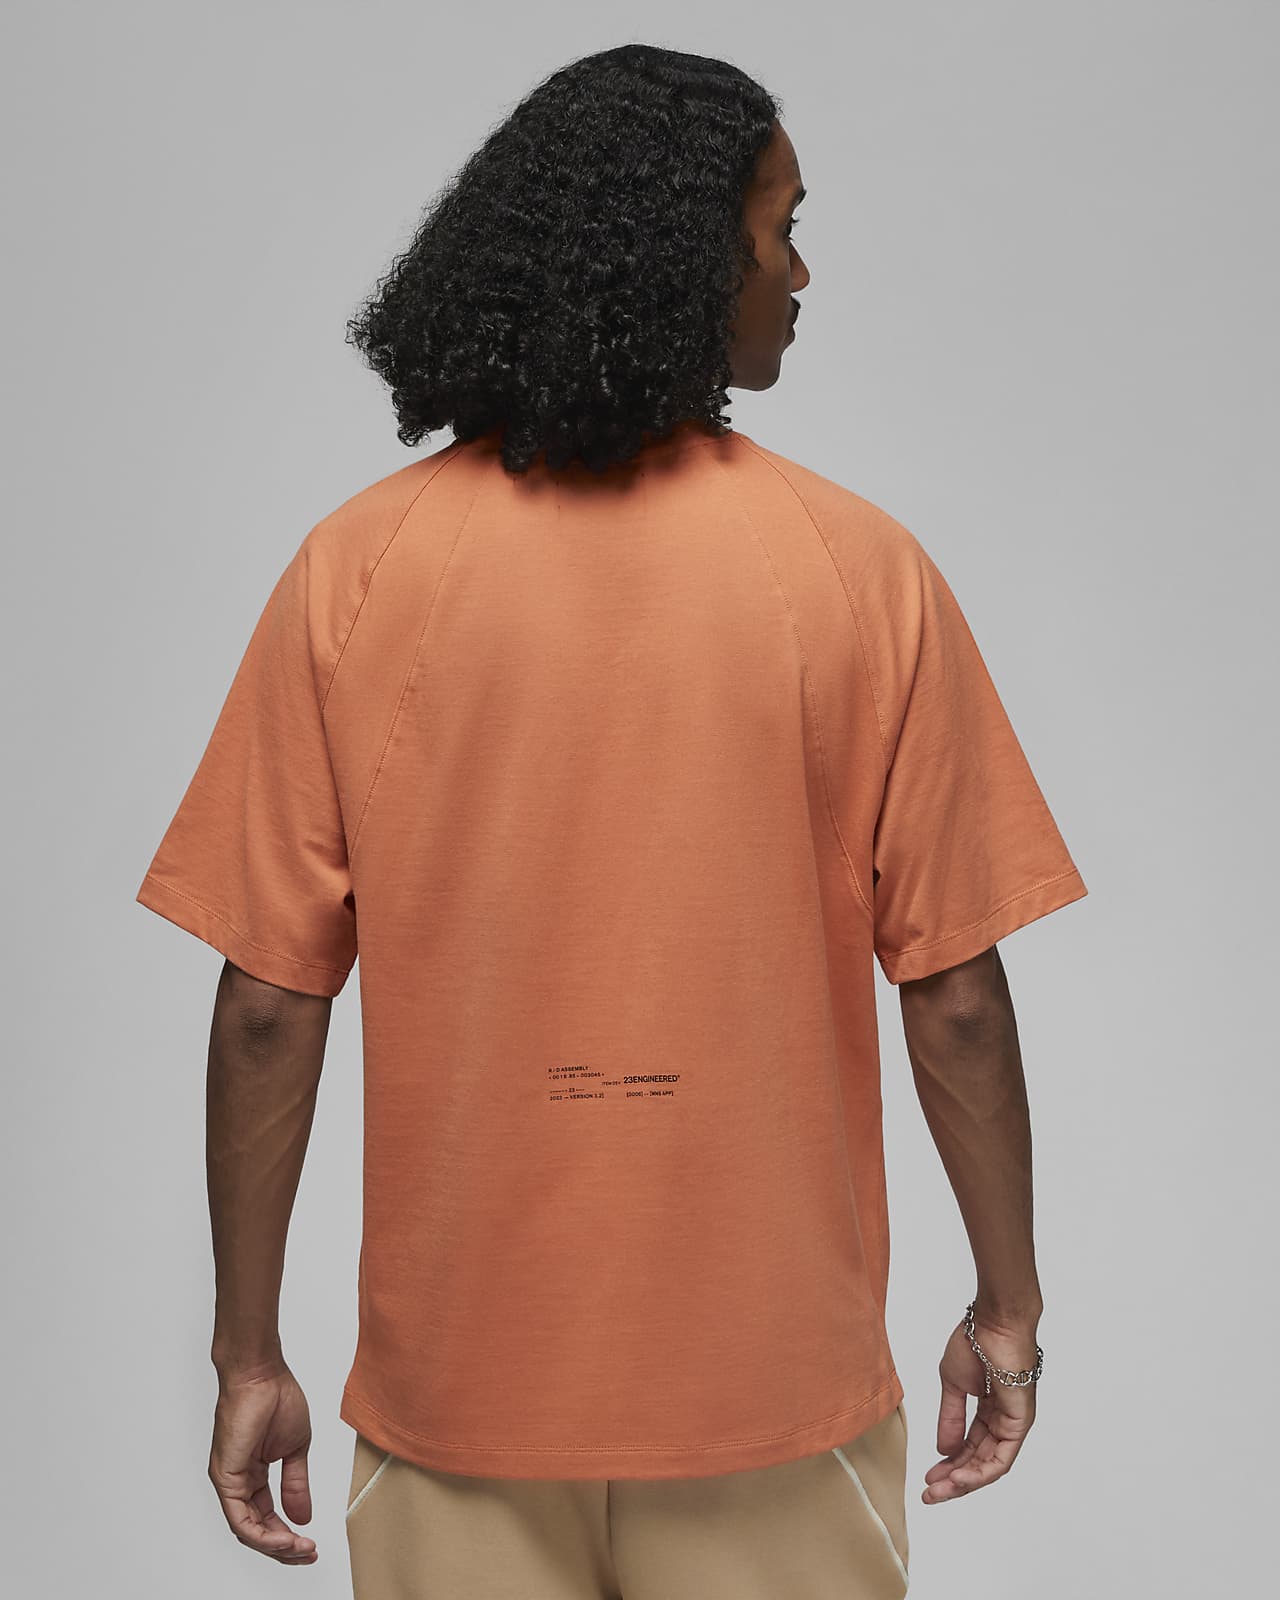 Jordan 23 Engineered Men\'s T-Shirt. CA Nike